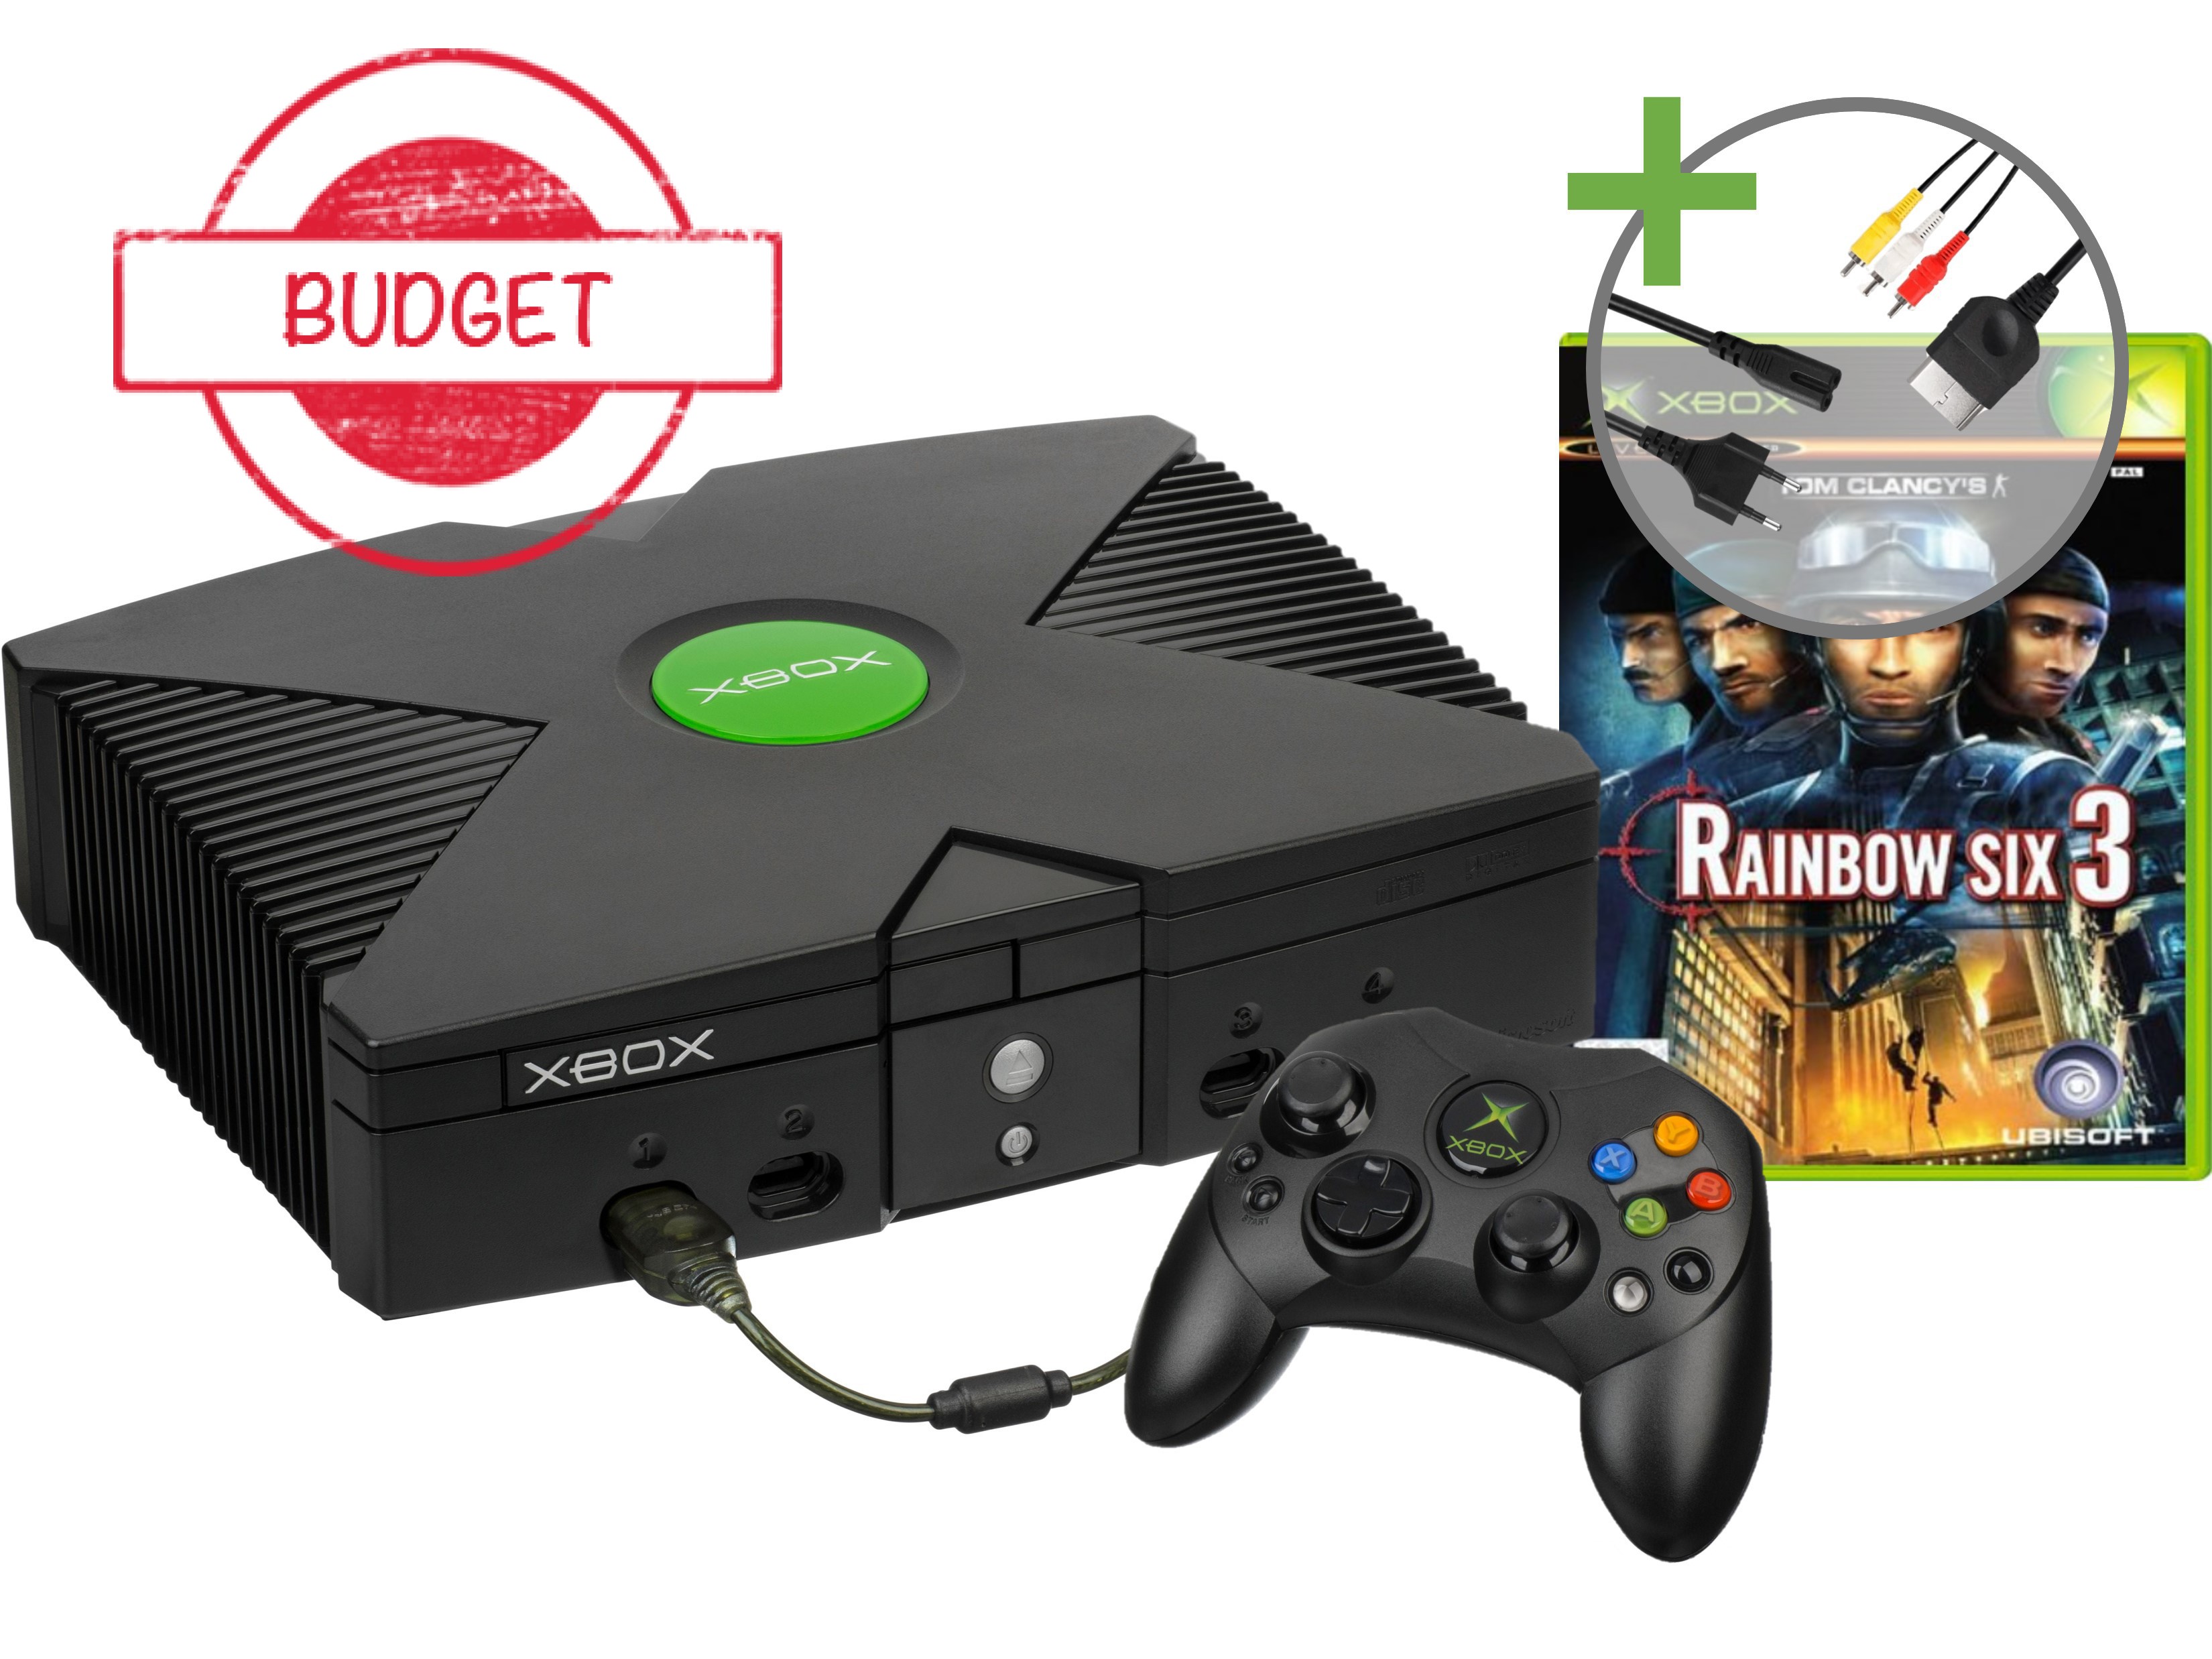 Microsoft Xbox Classic Starter Pack - Rainbow Six 3 Edition - Budget - Xbox Original Hardware